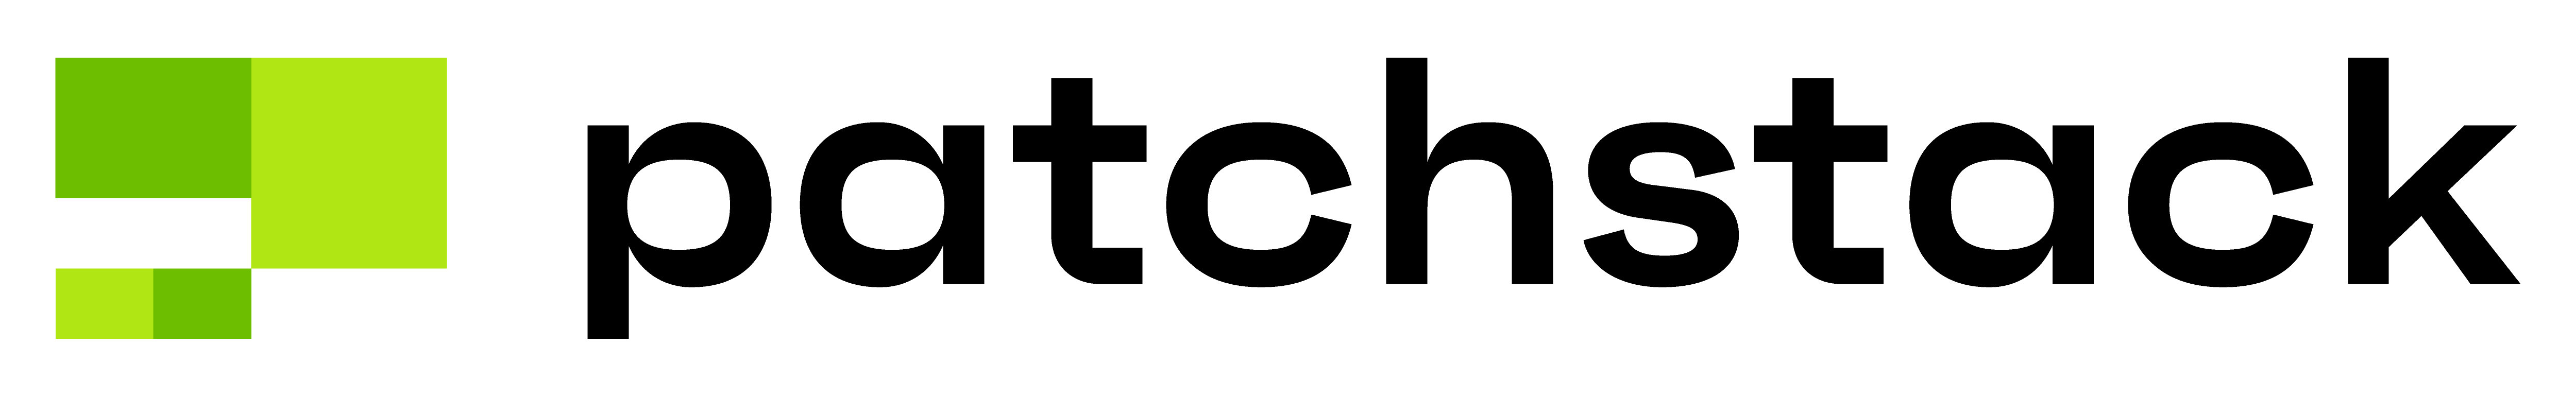 Patchstack Logo